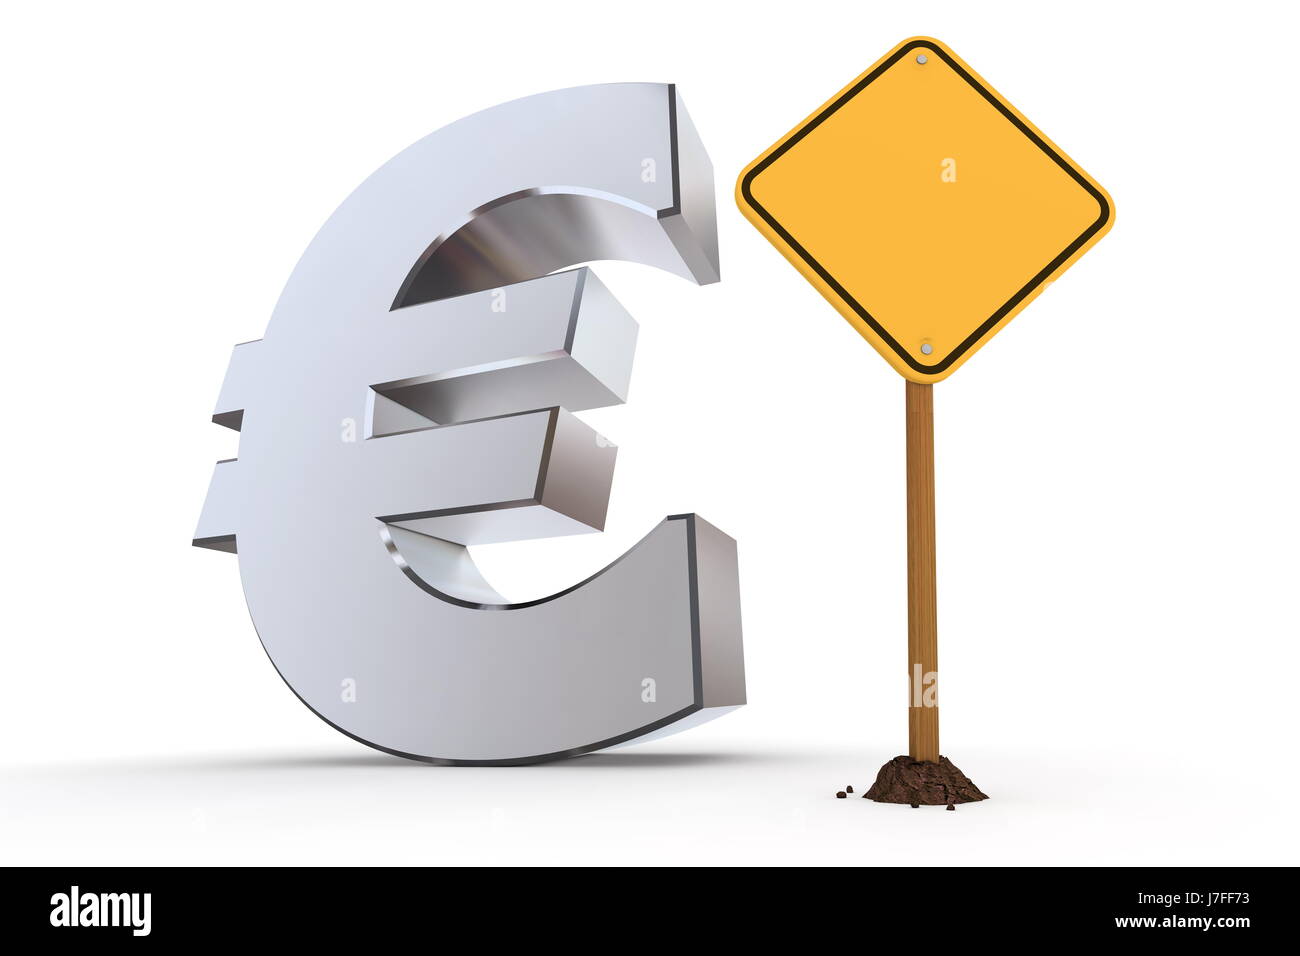 sign signal currency euro quadrangular metallic pictogram symbol pictograph Stock Photo